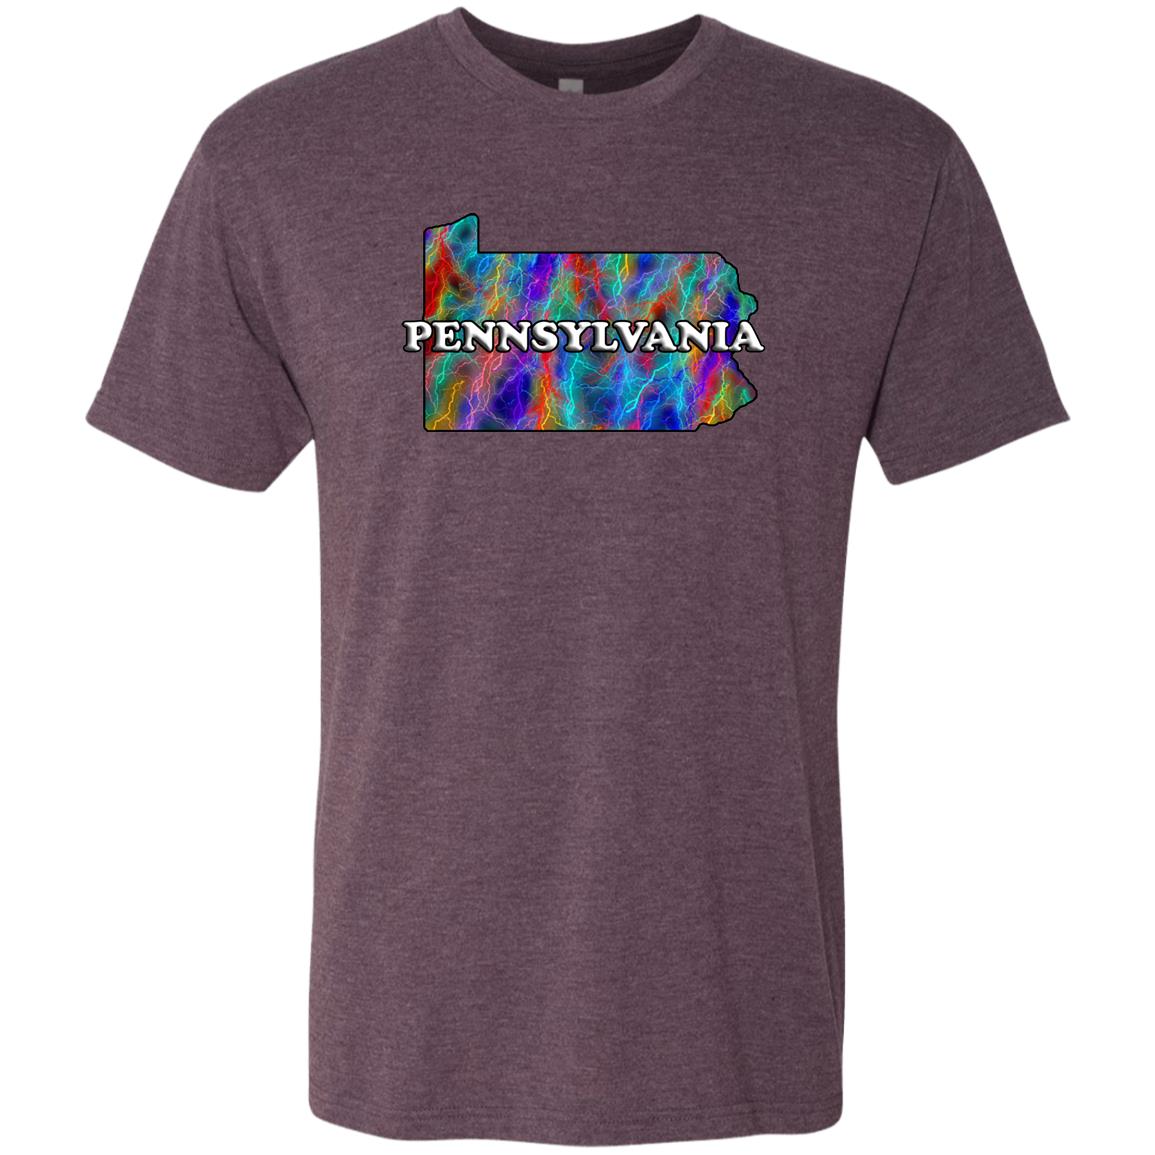 Pennsylvania State T-Shirt